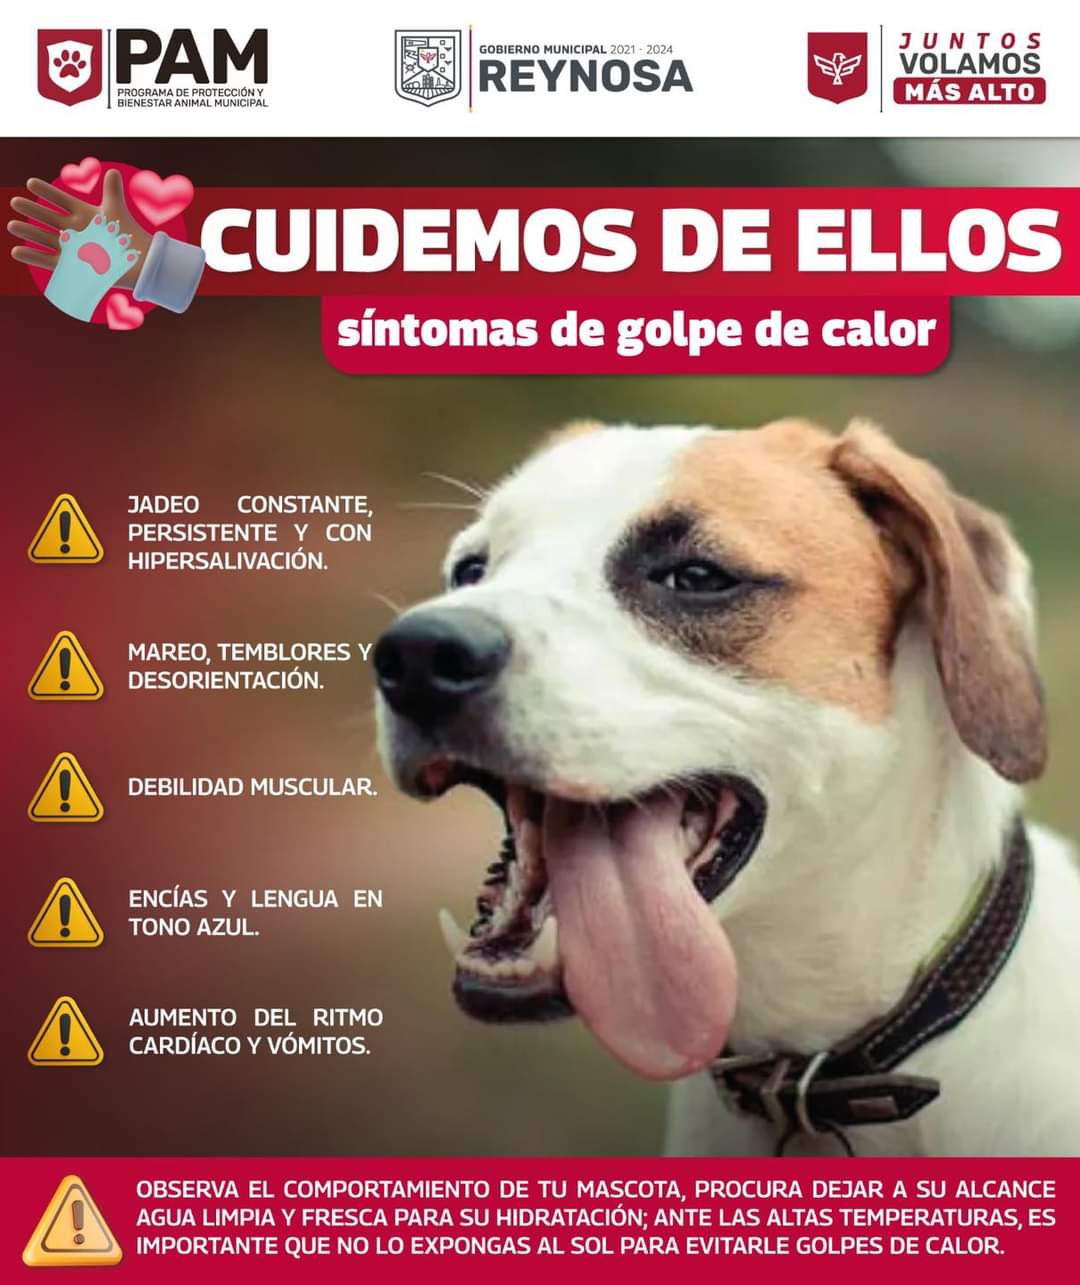 Exhorta Gobierno de Reynosa a cuidar mascotas ante ola de calor